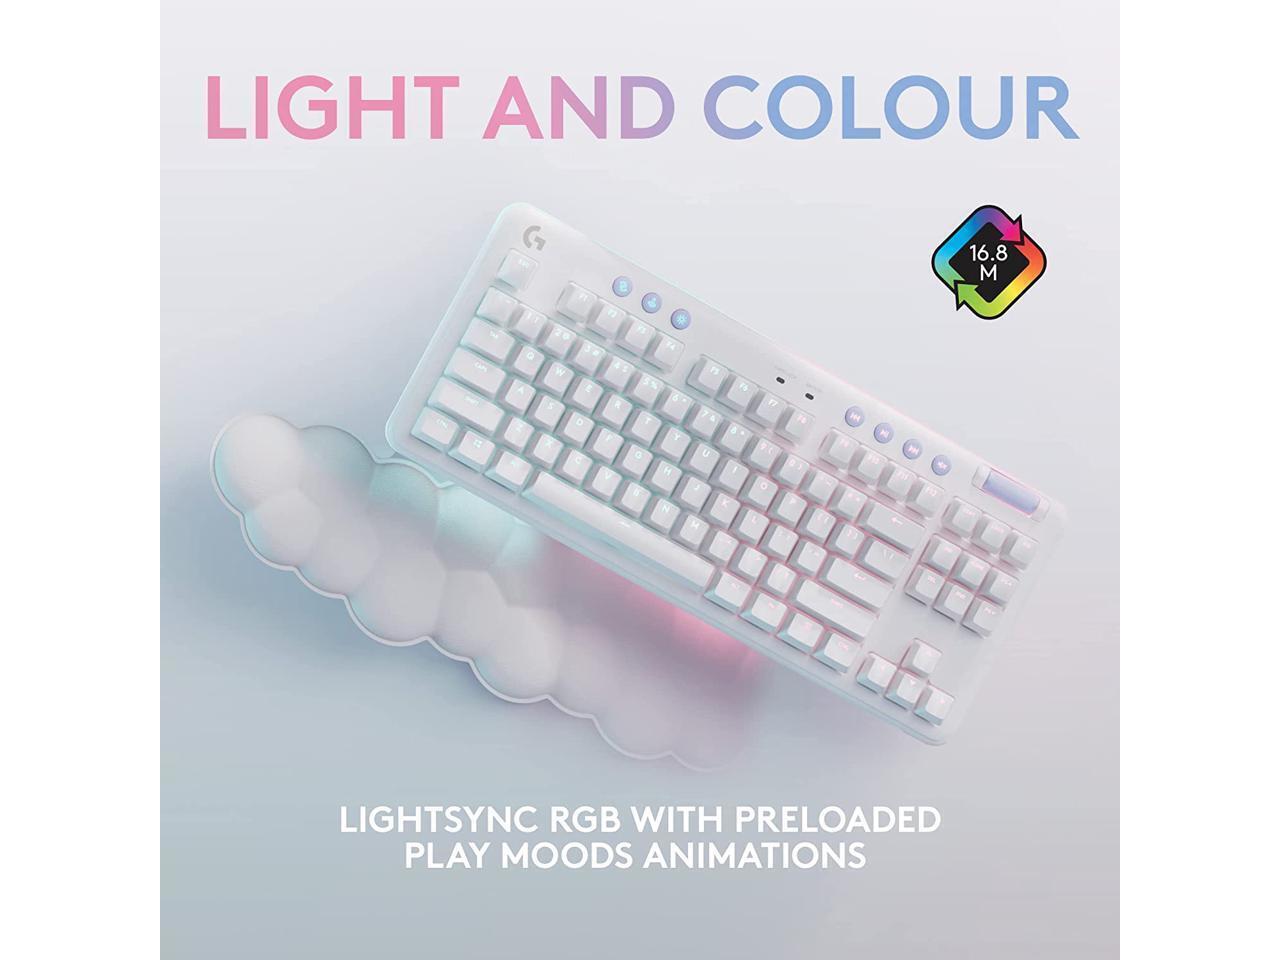 Logitech G715 Wireless Mechanical Gaming Keyboard with LIGHTSYNC RGB